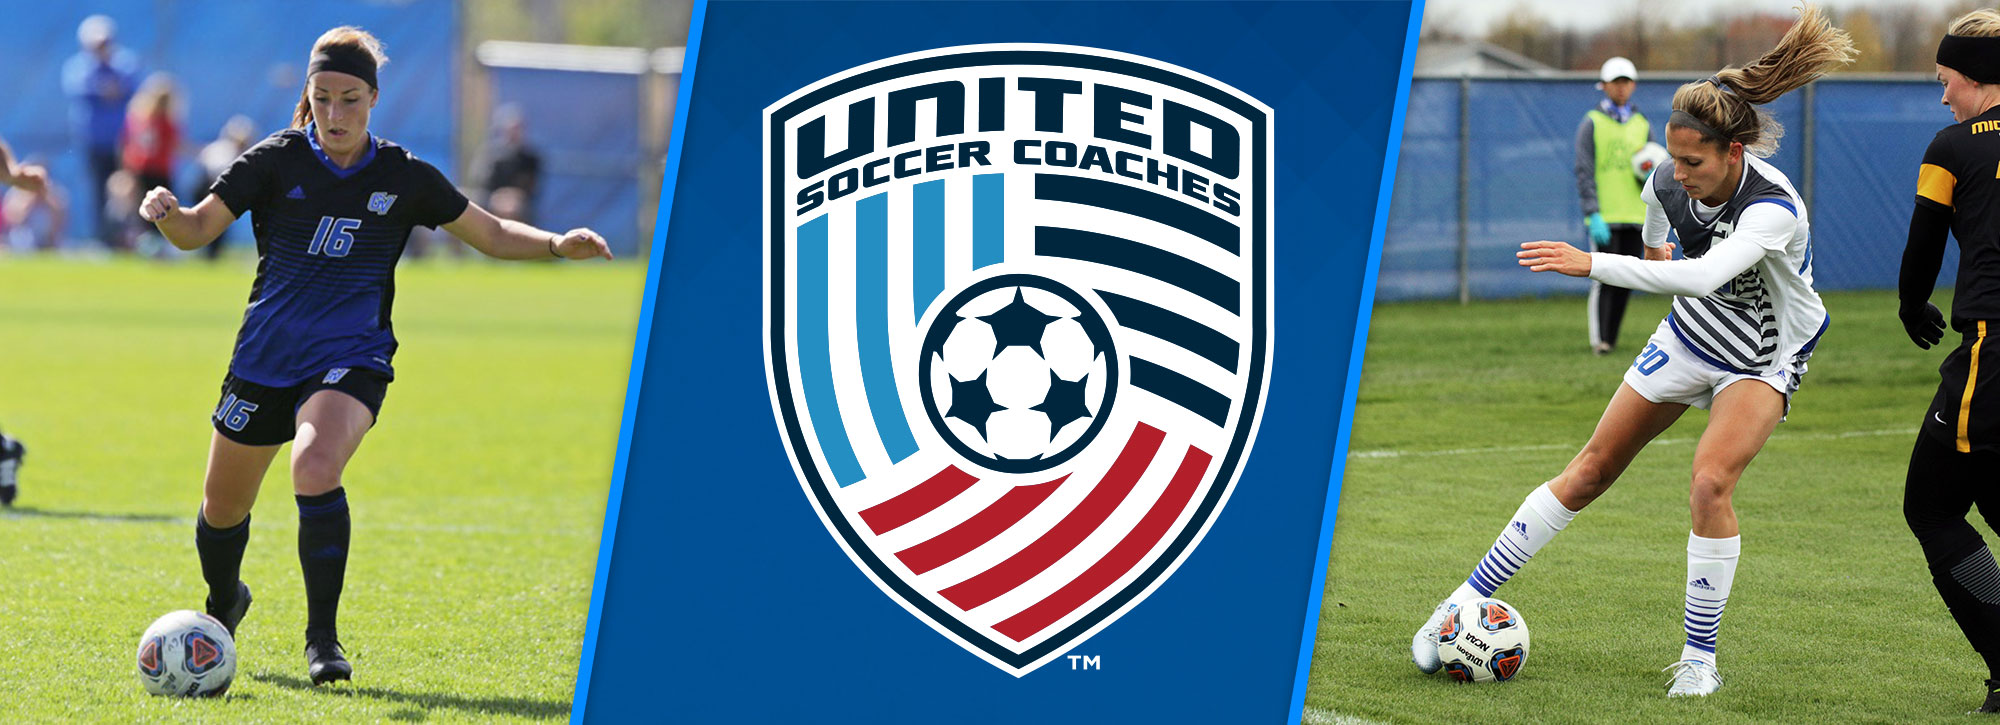 GVSU's Mencotti, Johnson Named United Soccer Coaches All-Americans